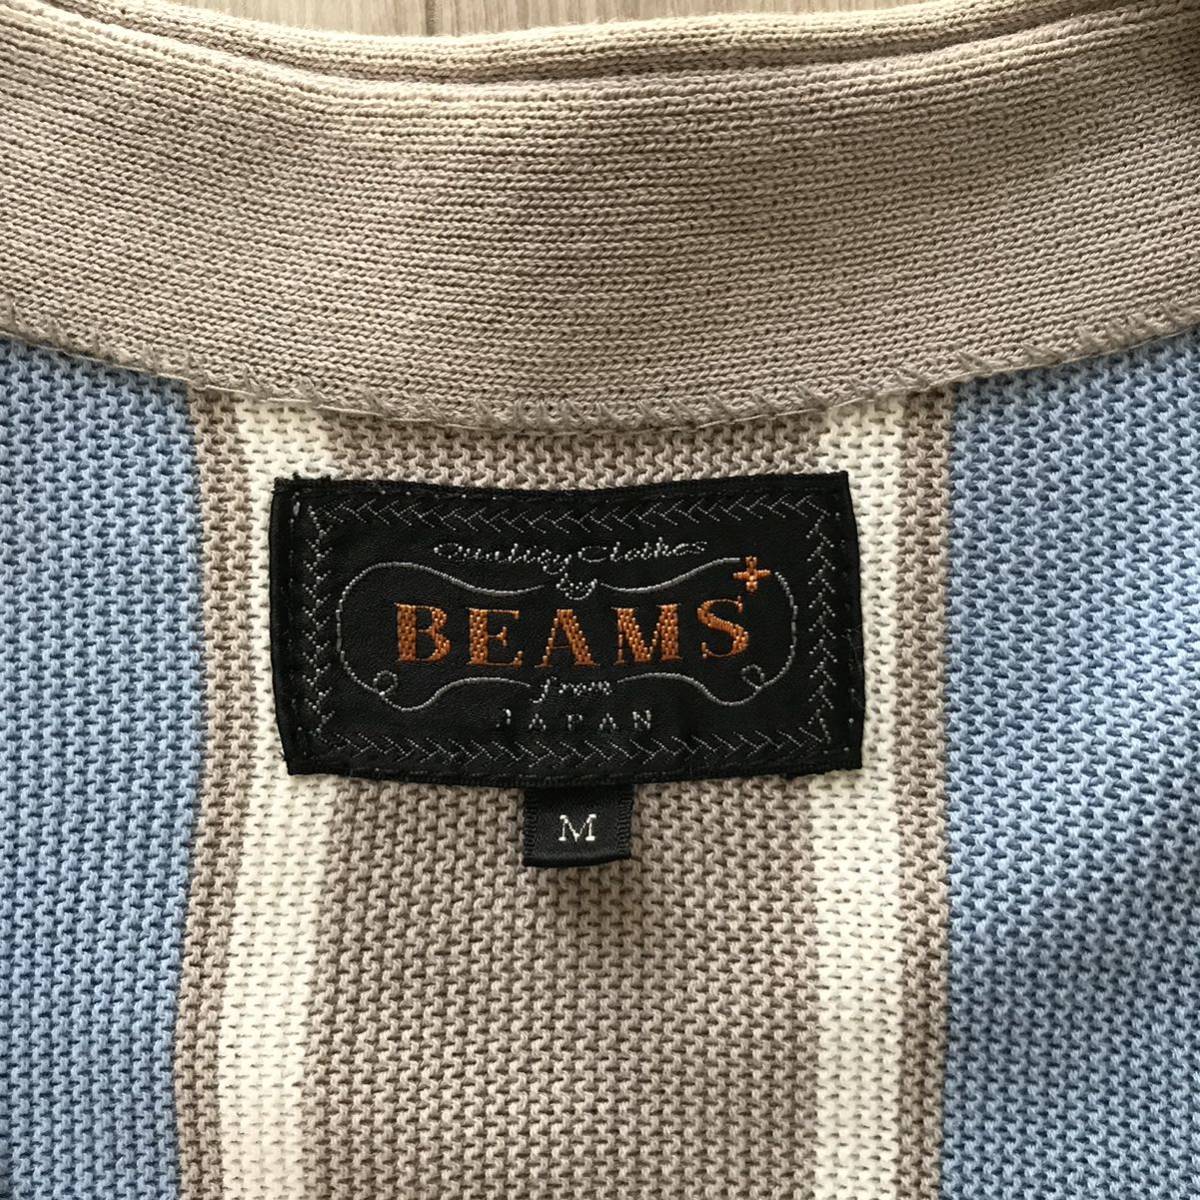 BEAMS PLUS Beams plus stripe cardigan jacket shirt sax blue border no color V neck T-shirt knitted 